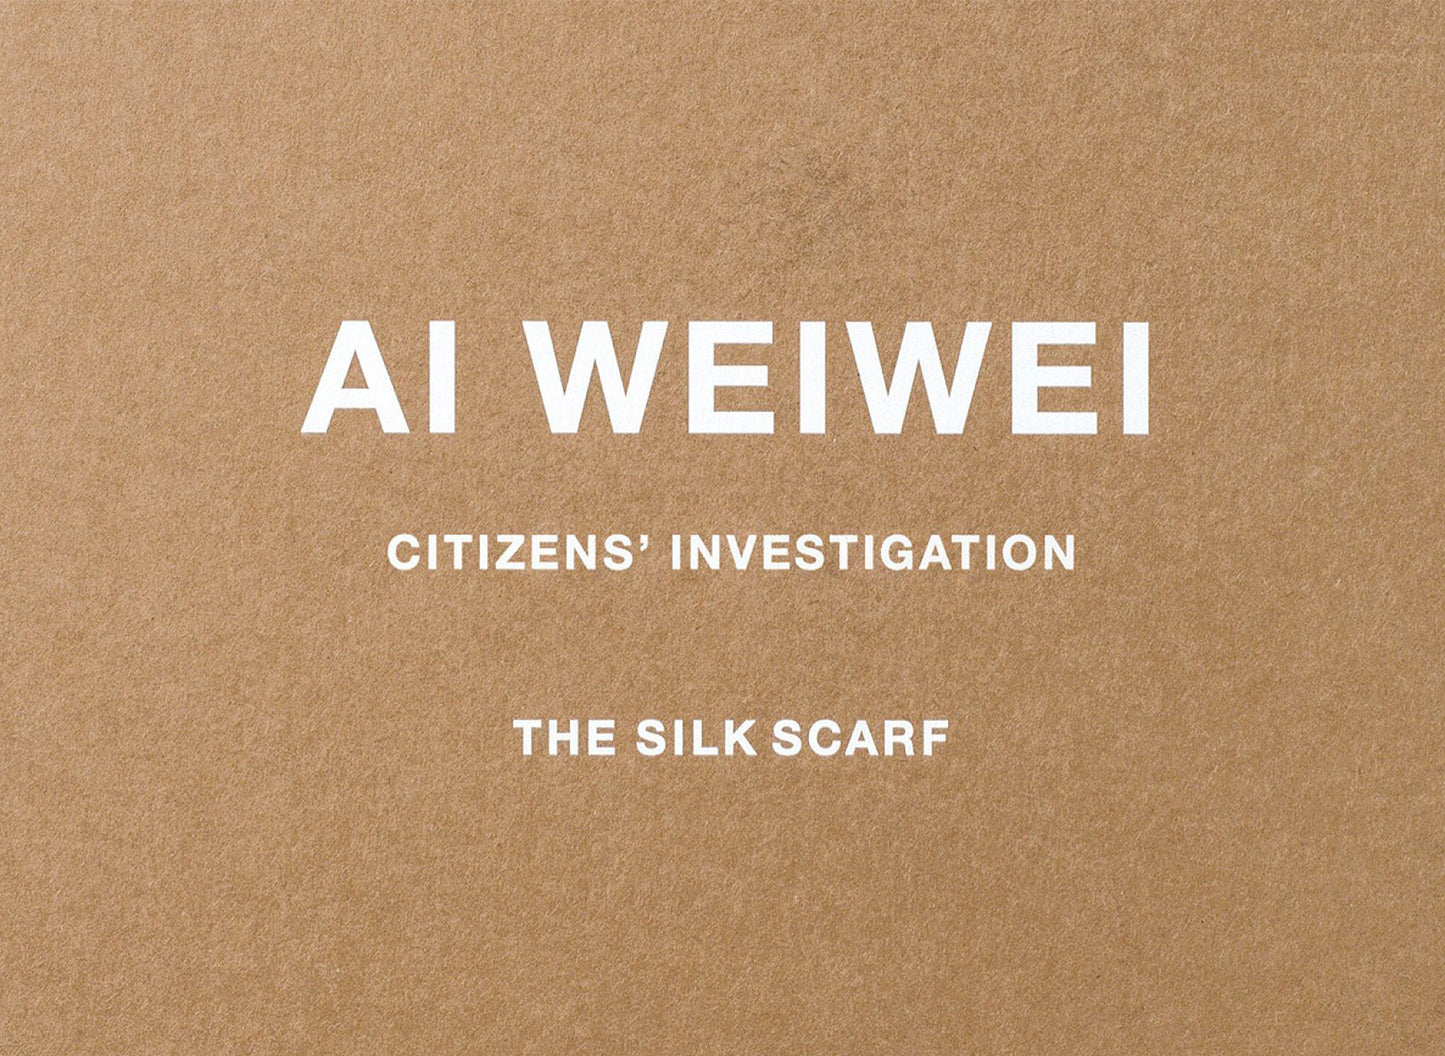 Taschen Limited Edition ‘Citizens’ Investigation’ Scarf by Ai Weiwei